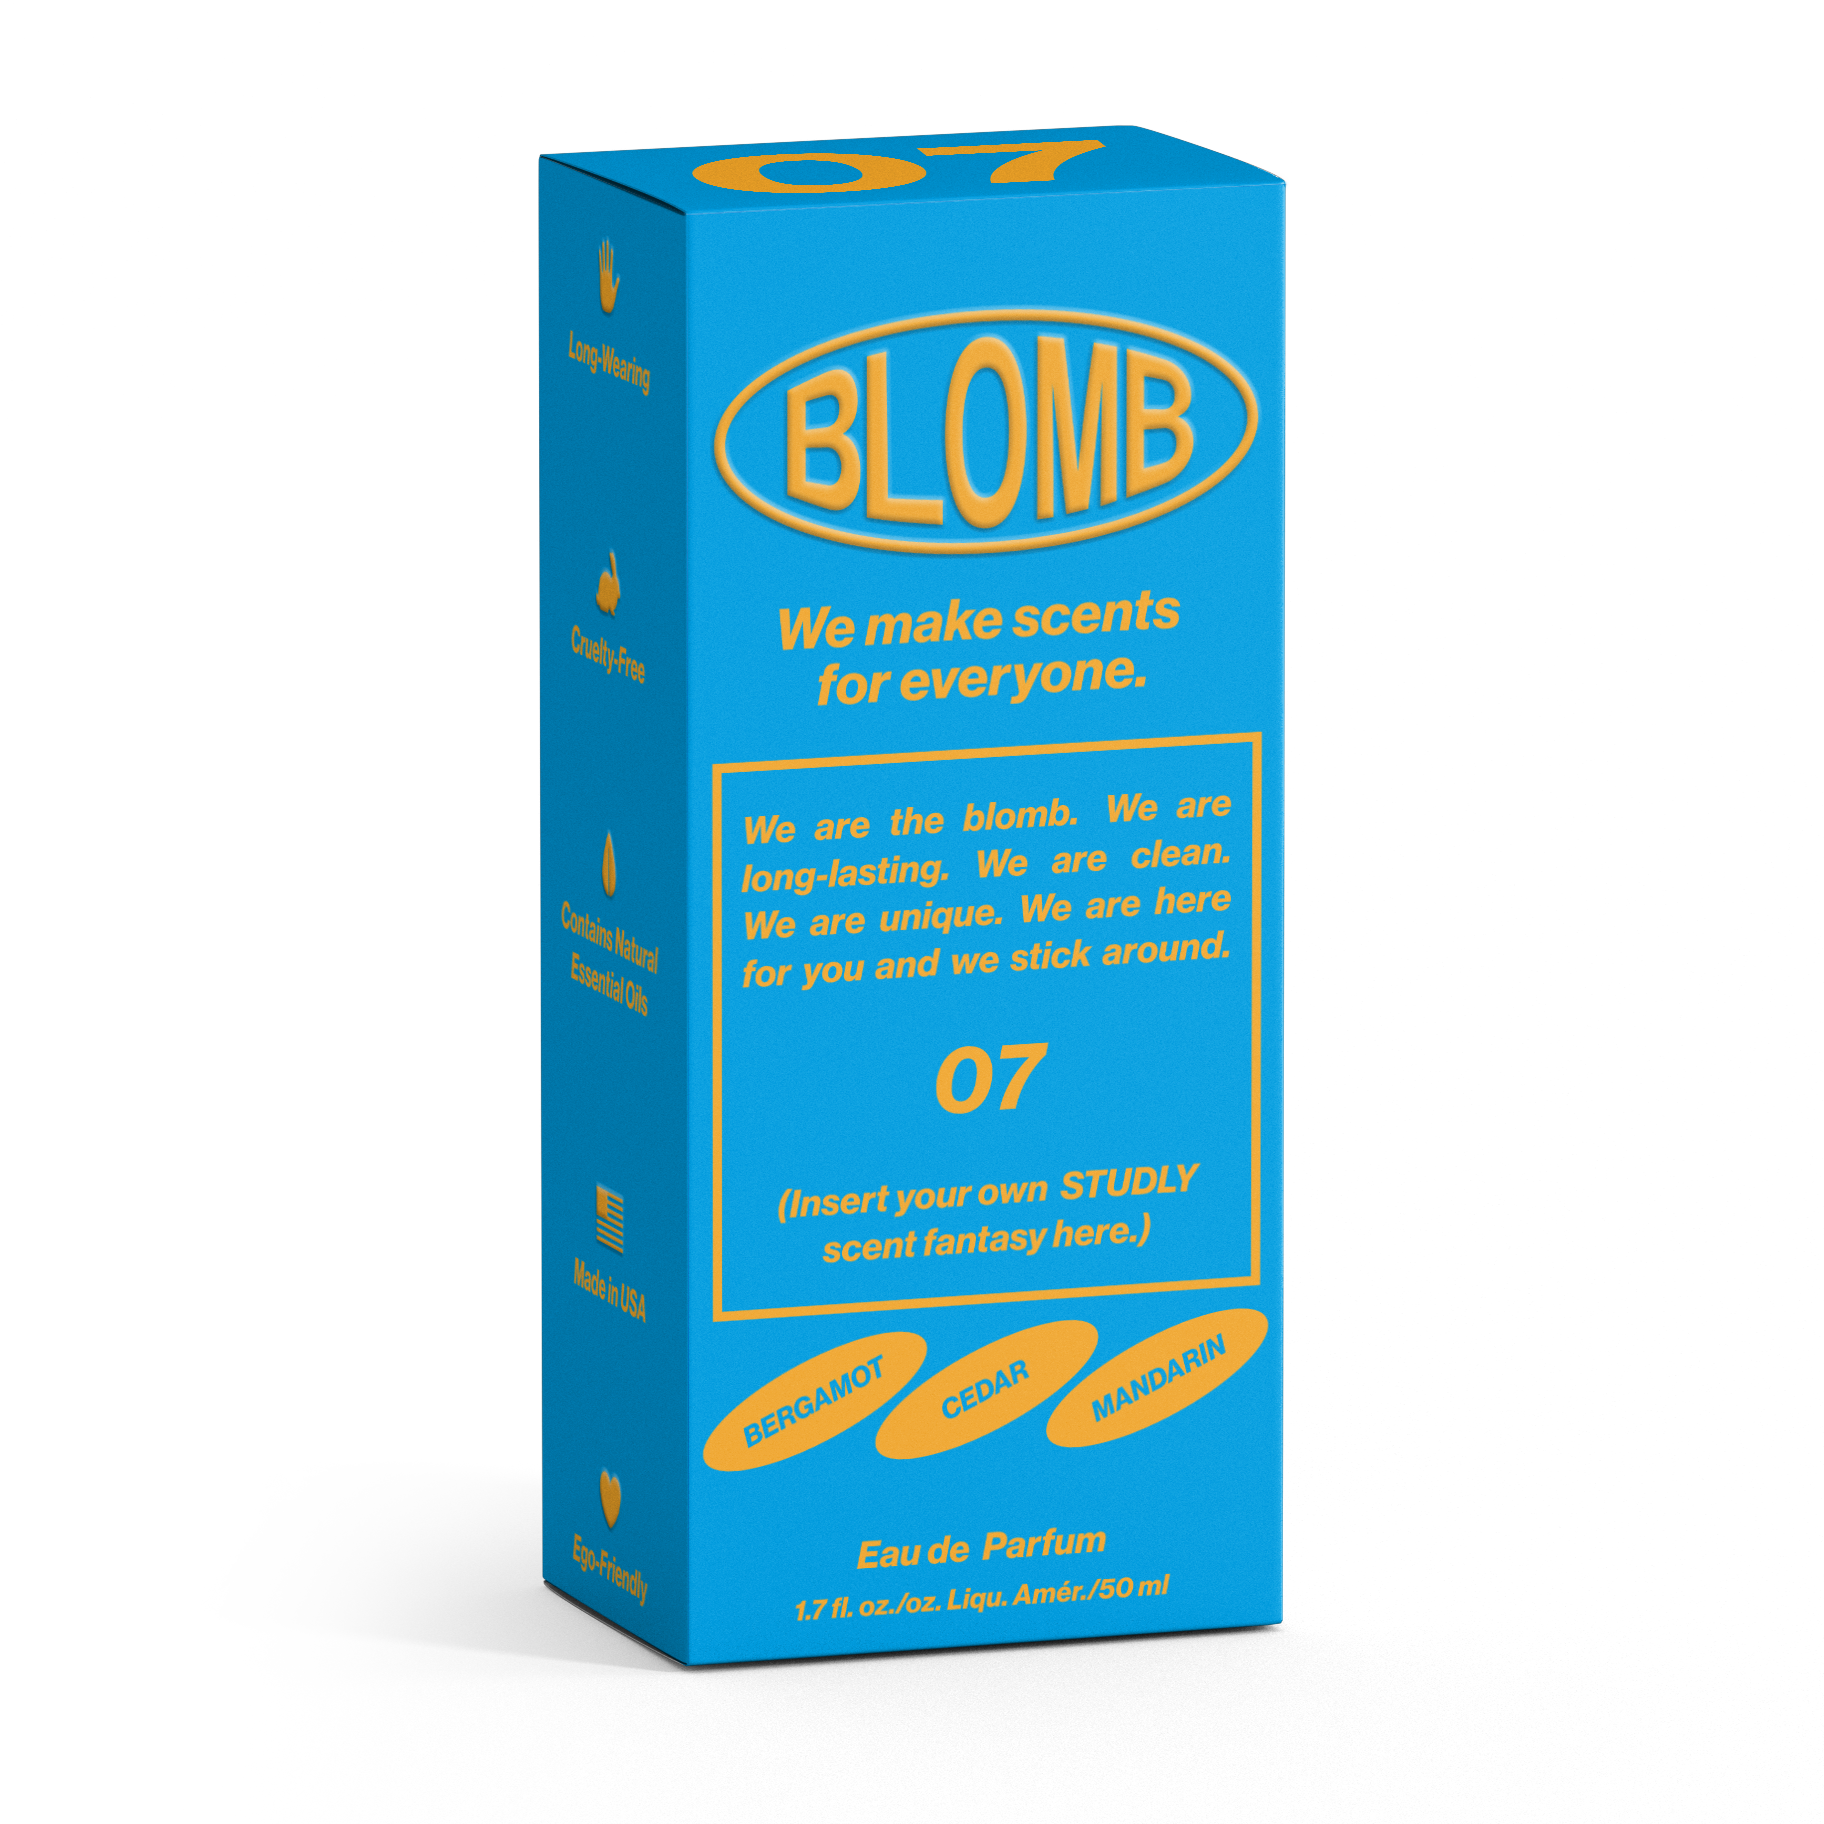 Blomb Fragrance | No. 7